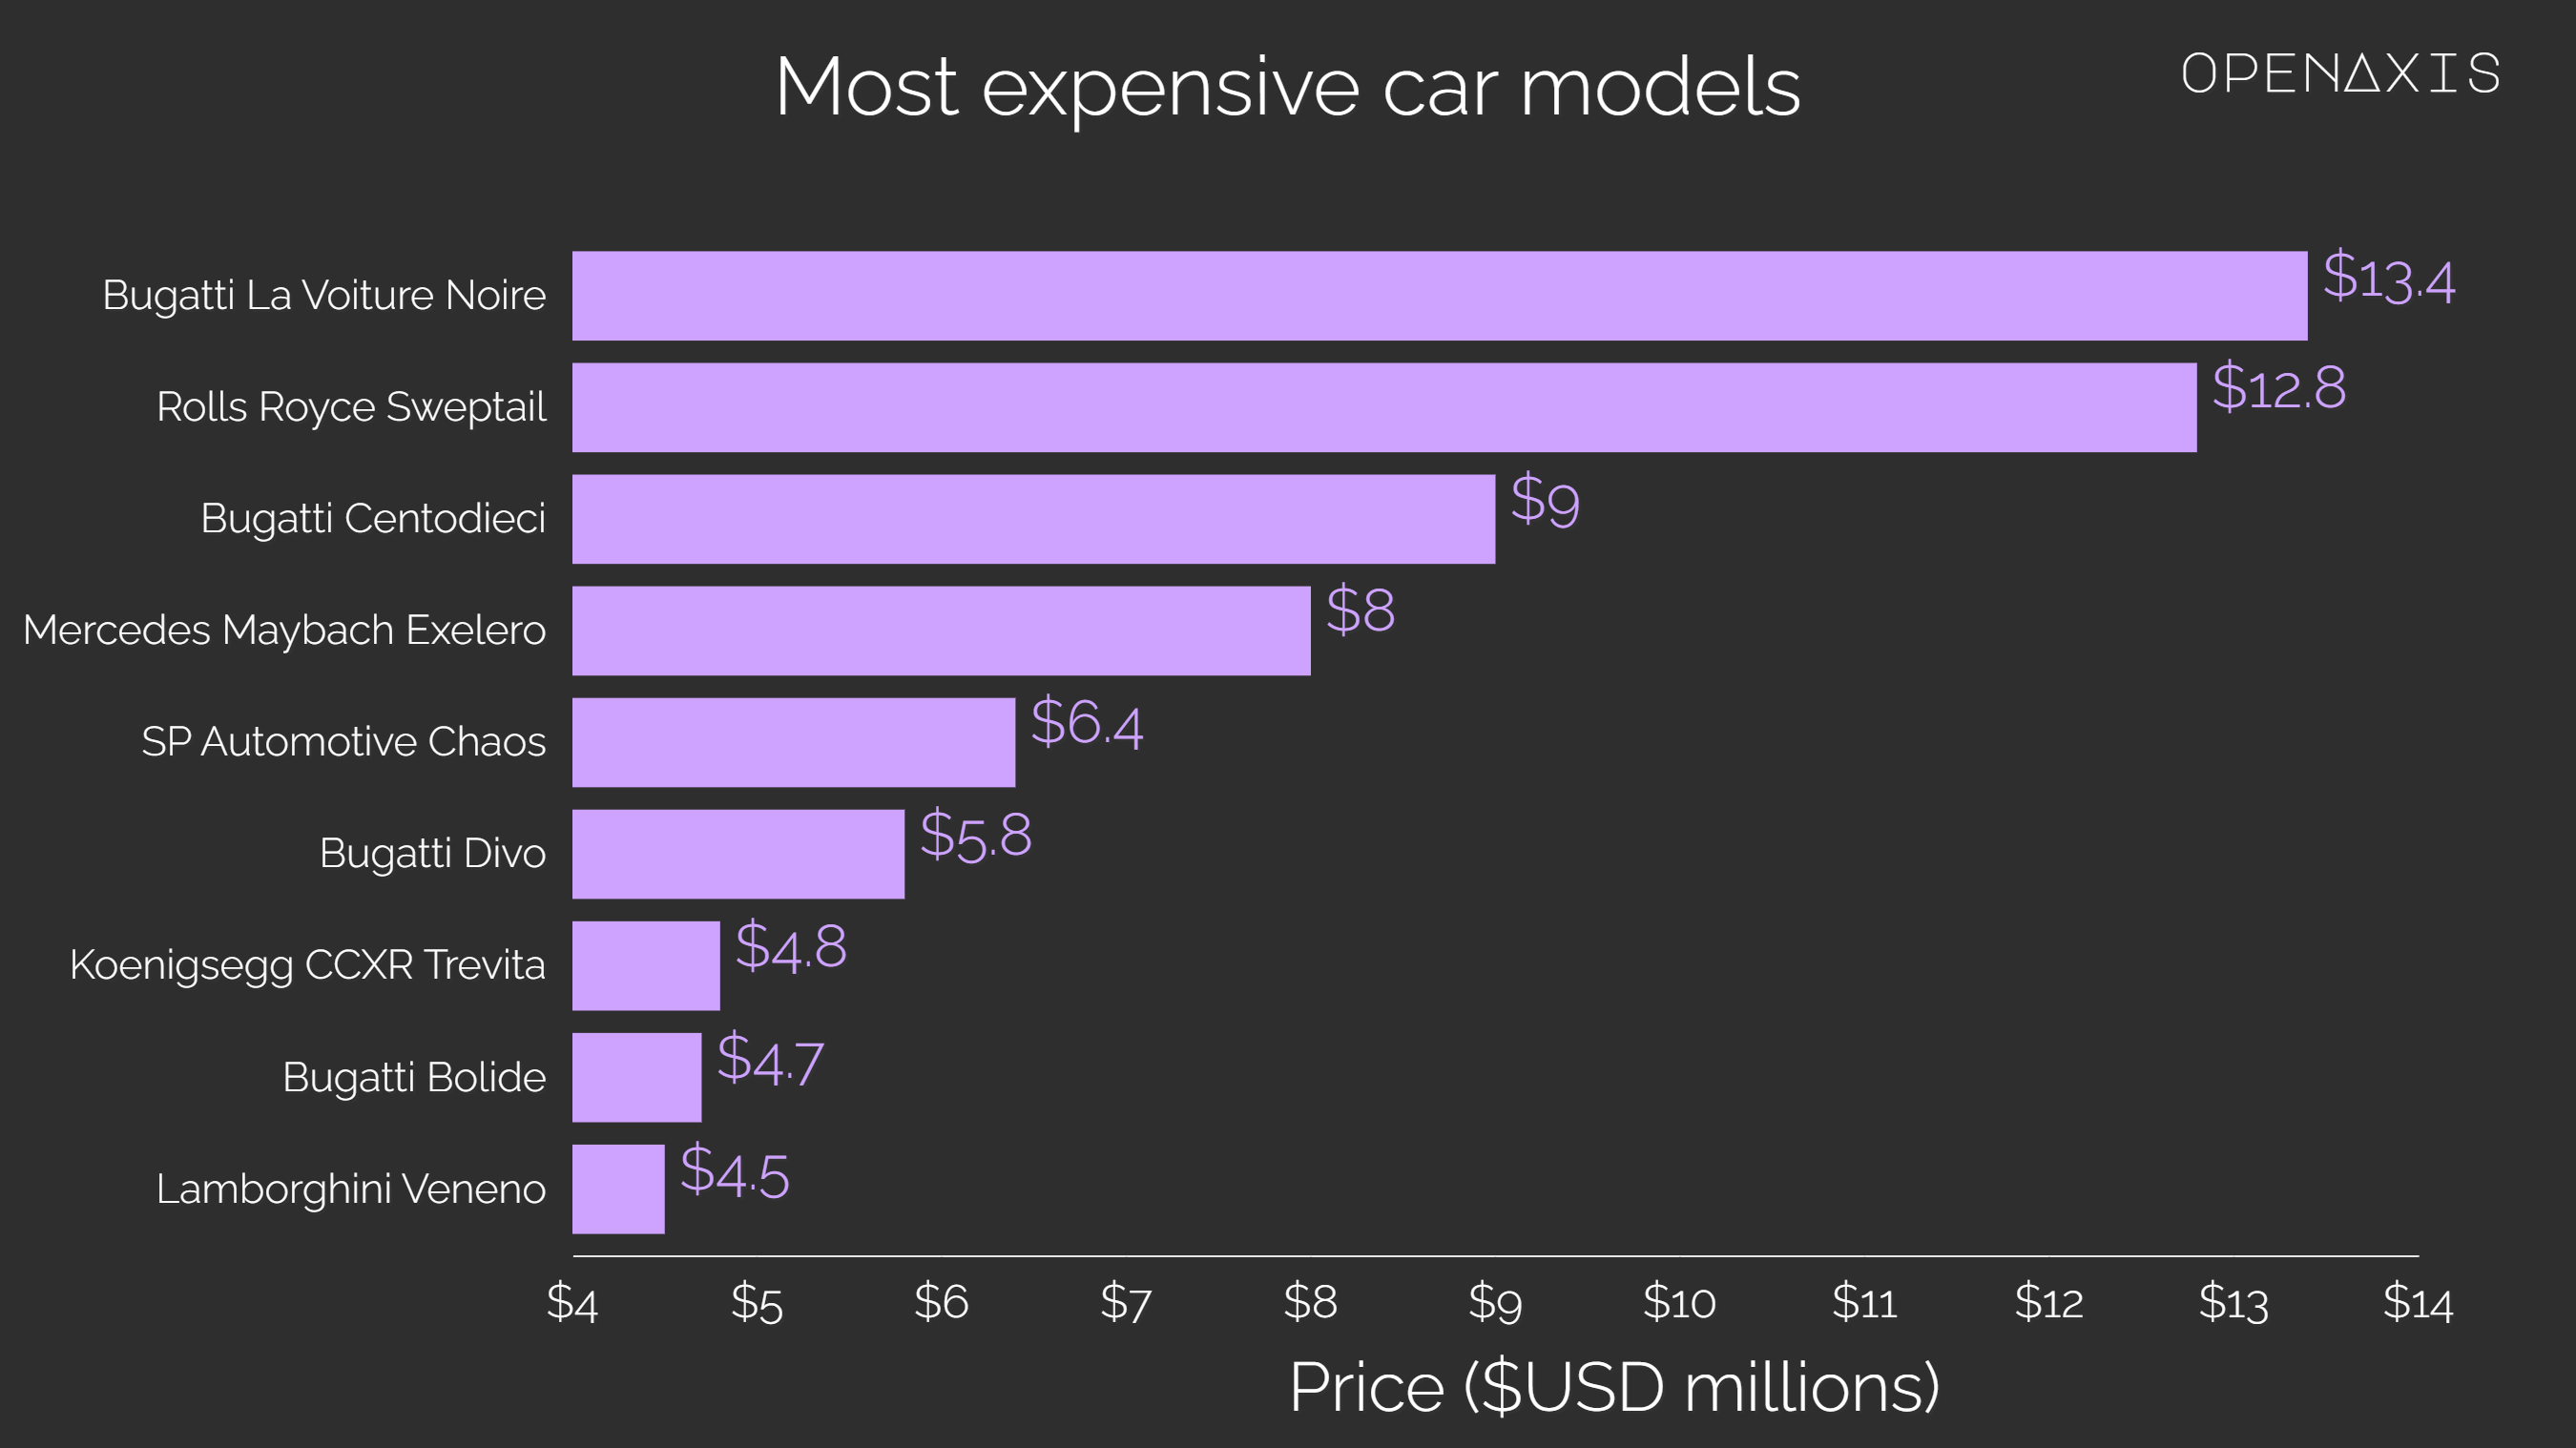 "Most expensive car models"